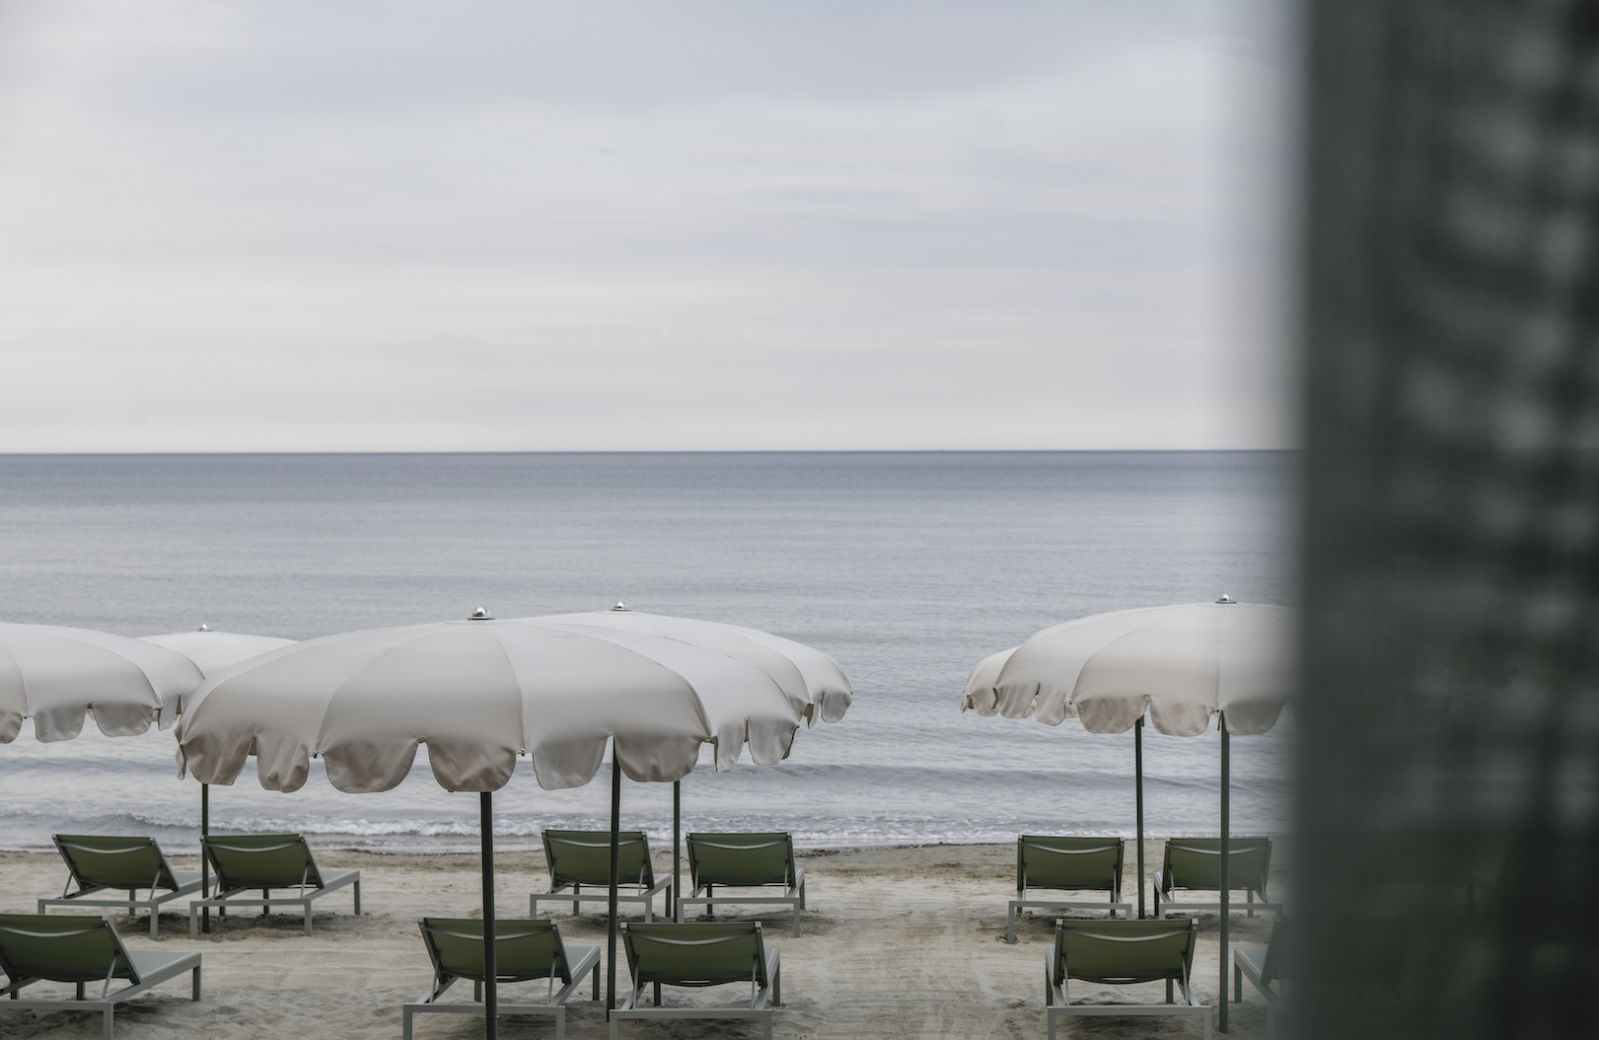 Best Mediterranean Hotels & Villas | Coast to Towns | The Aficionados